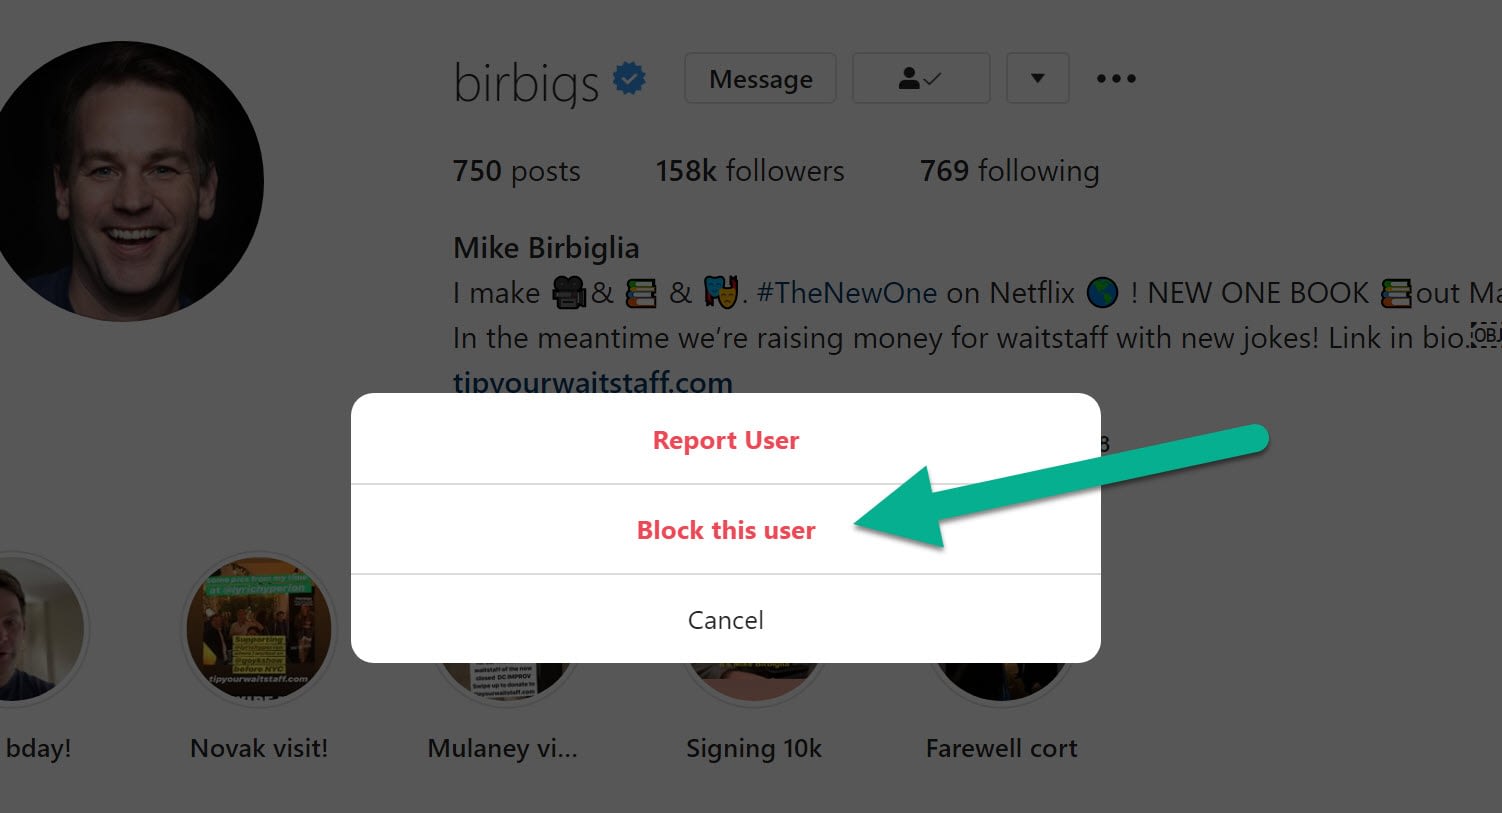 block this user - social media security